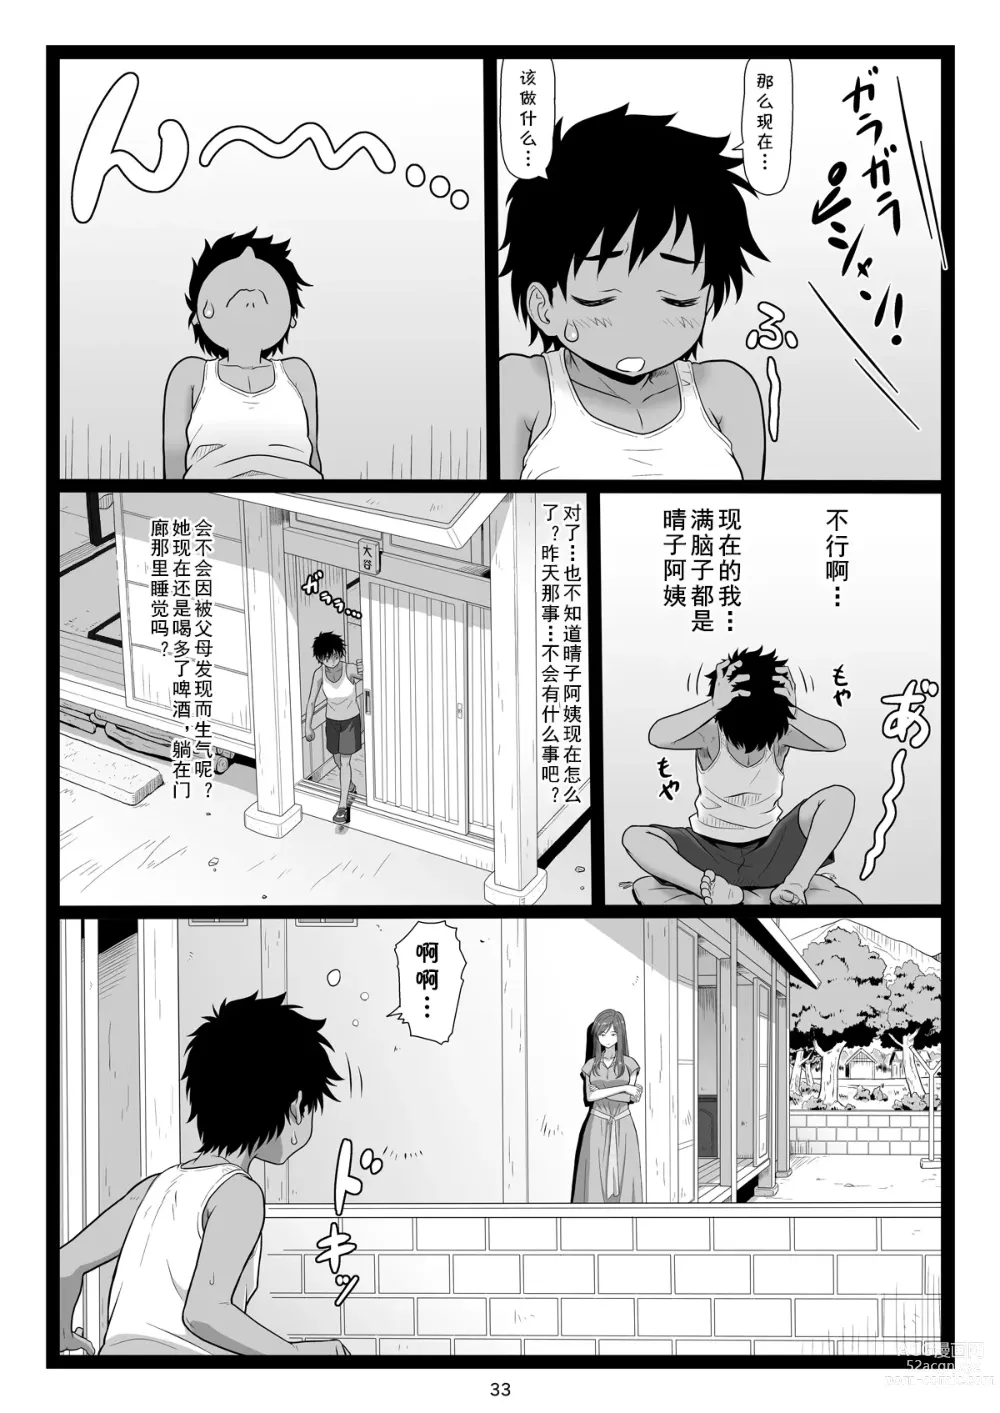 Page 33 of doujinshi Natsuyasumi no Omoide Joukan